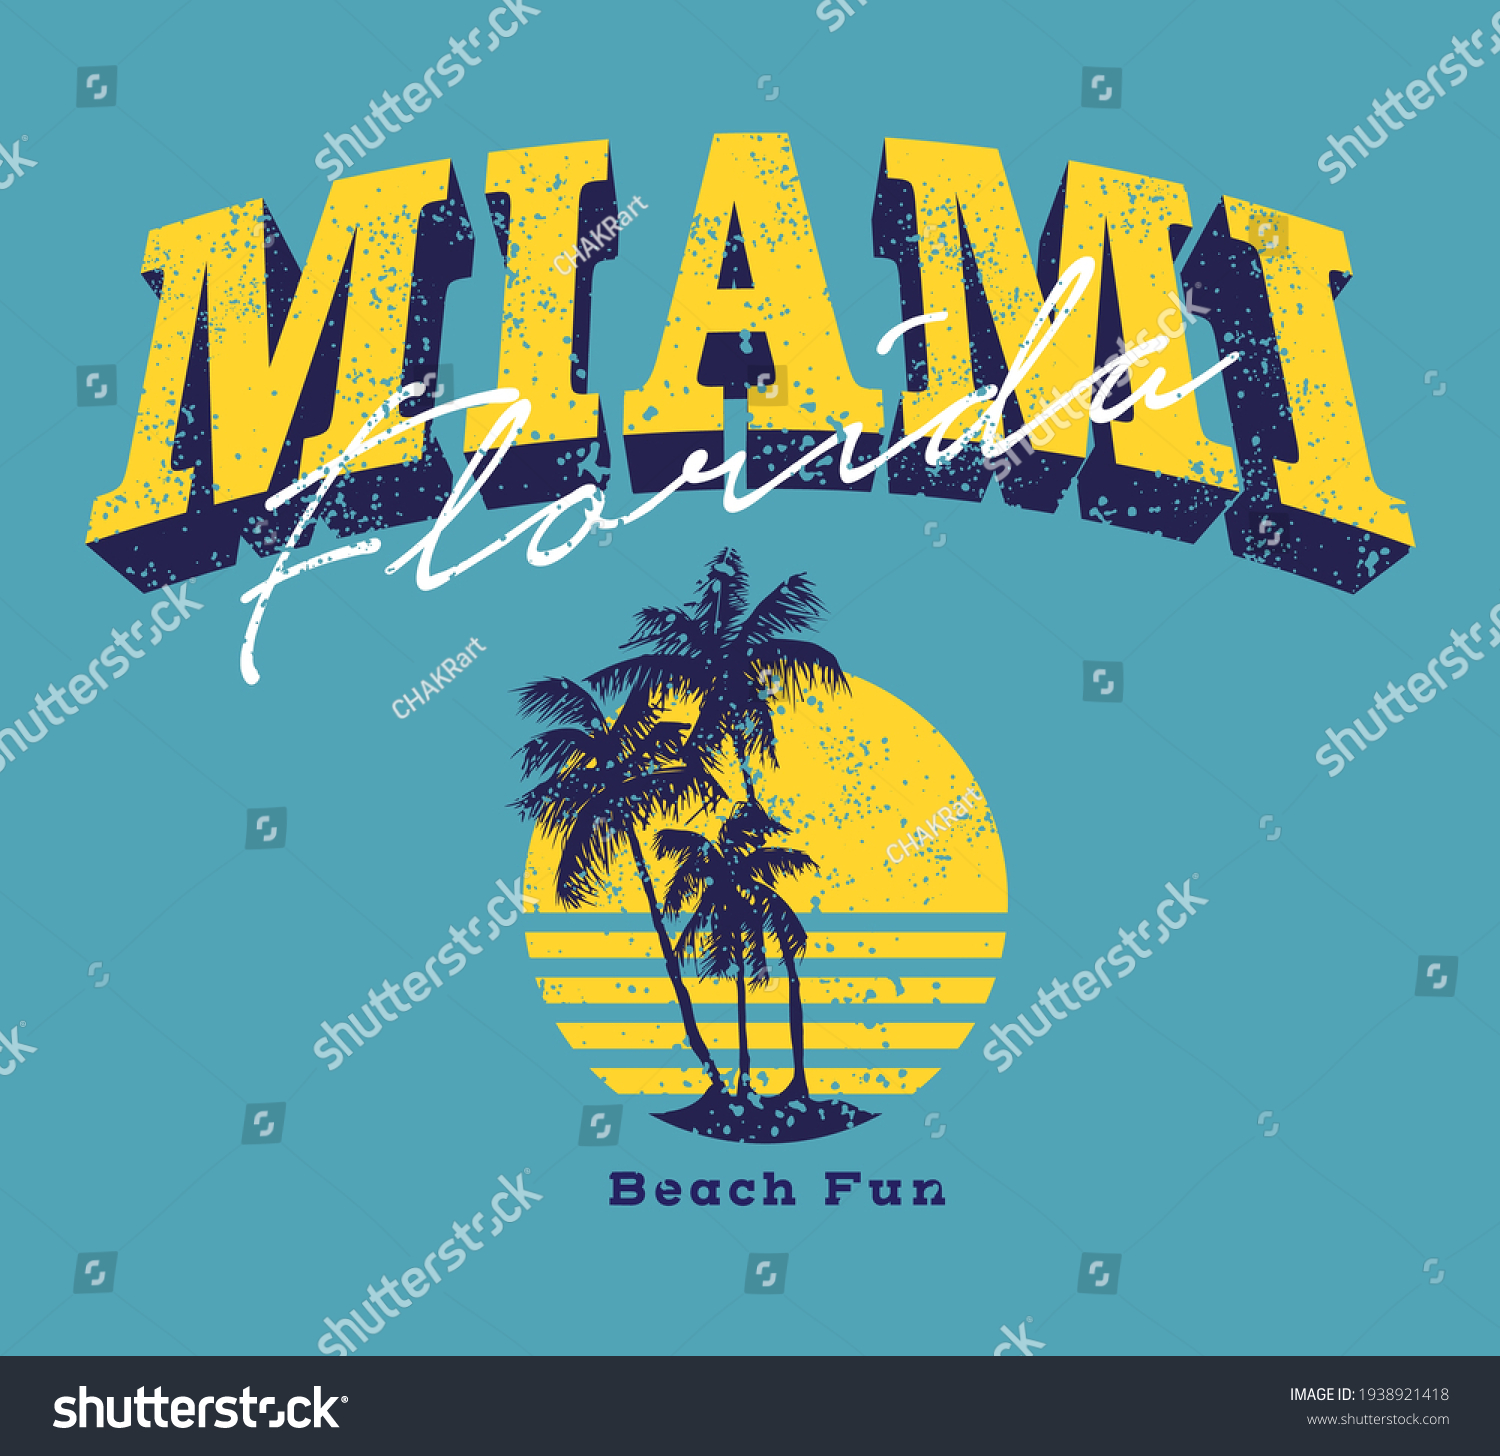 132,408 Palm beach surf Images, Stock Photos & Vectors | Shutterstock